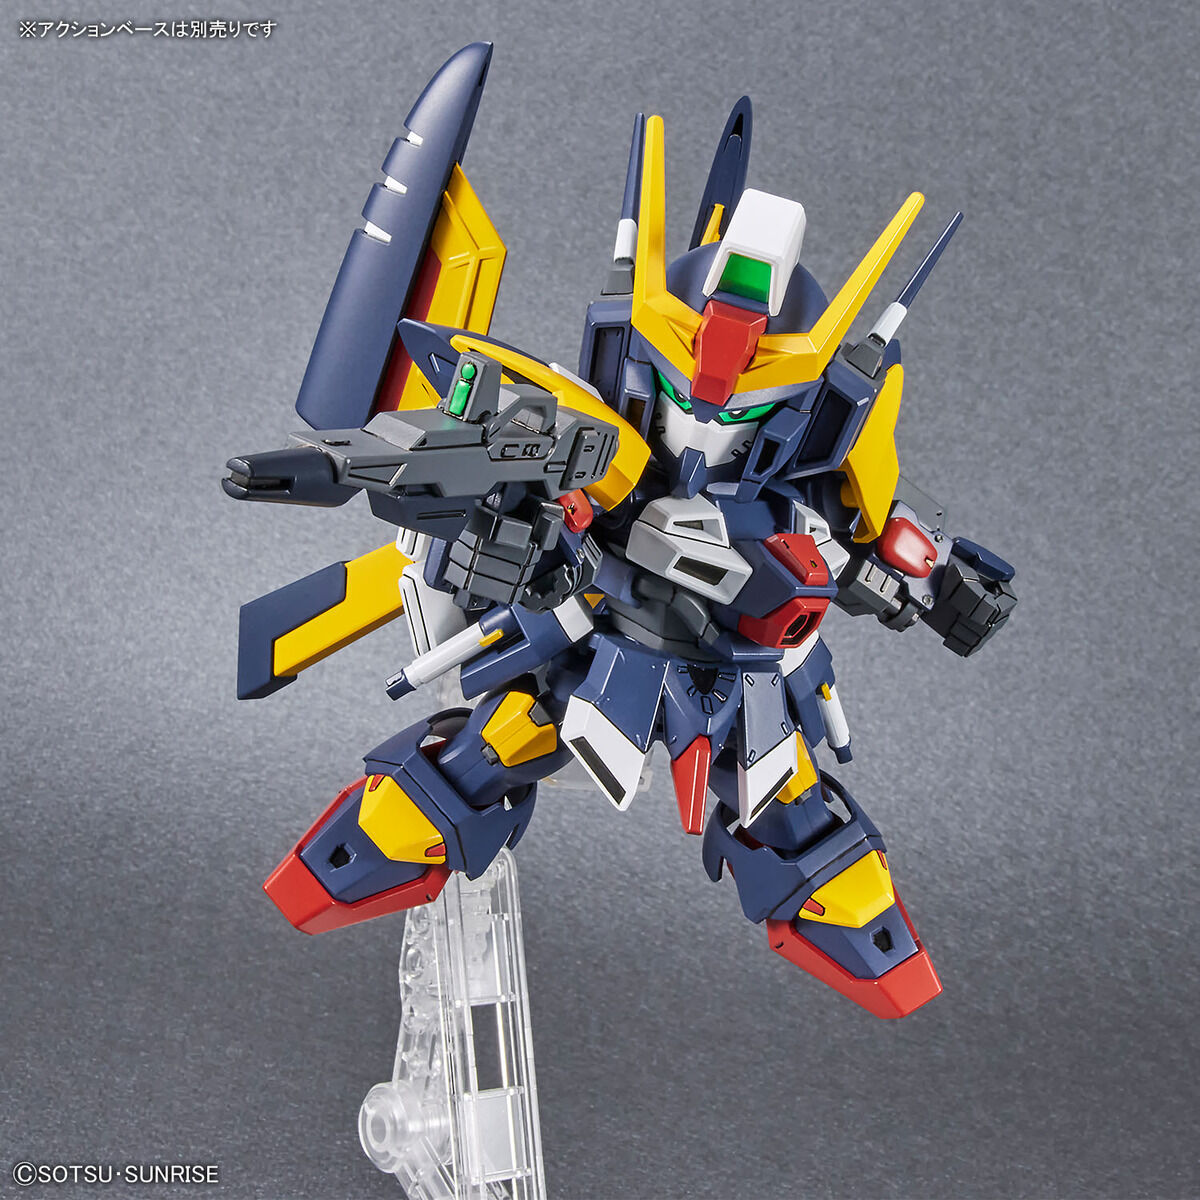 SD Gundam #18 Cross Silhouette Tornado Gundam